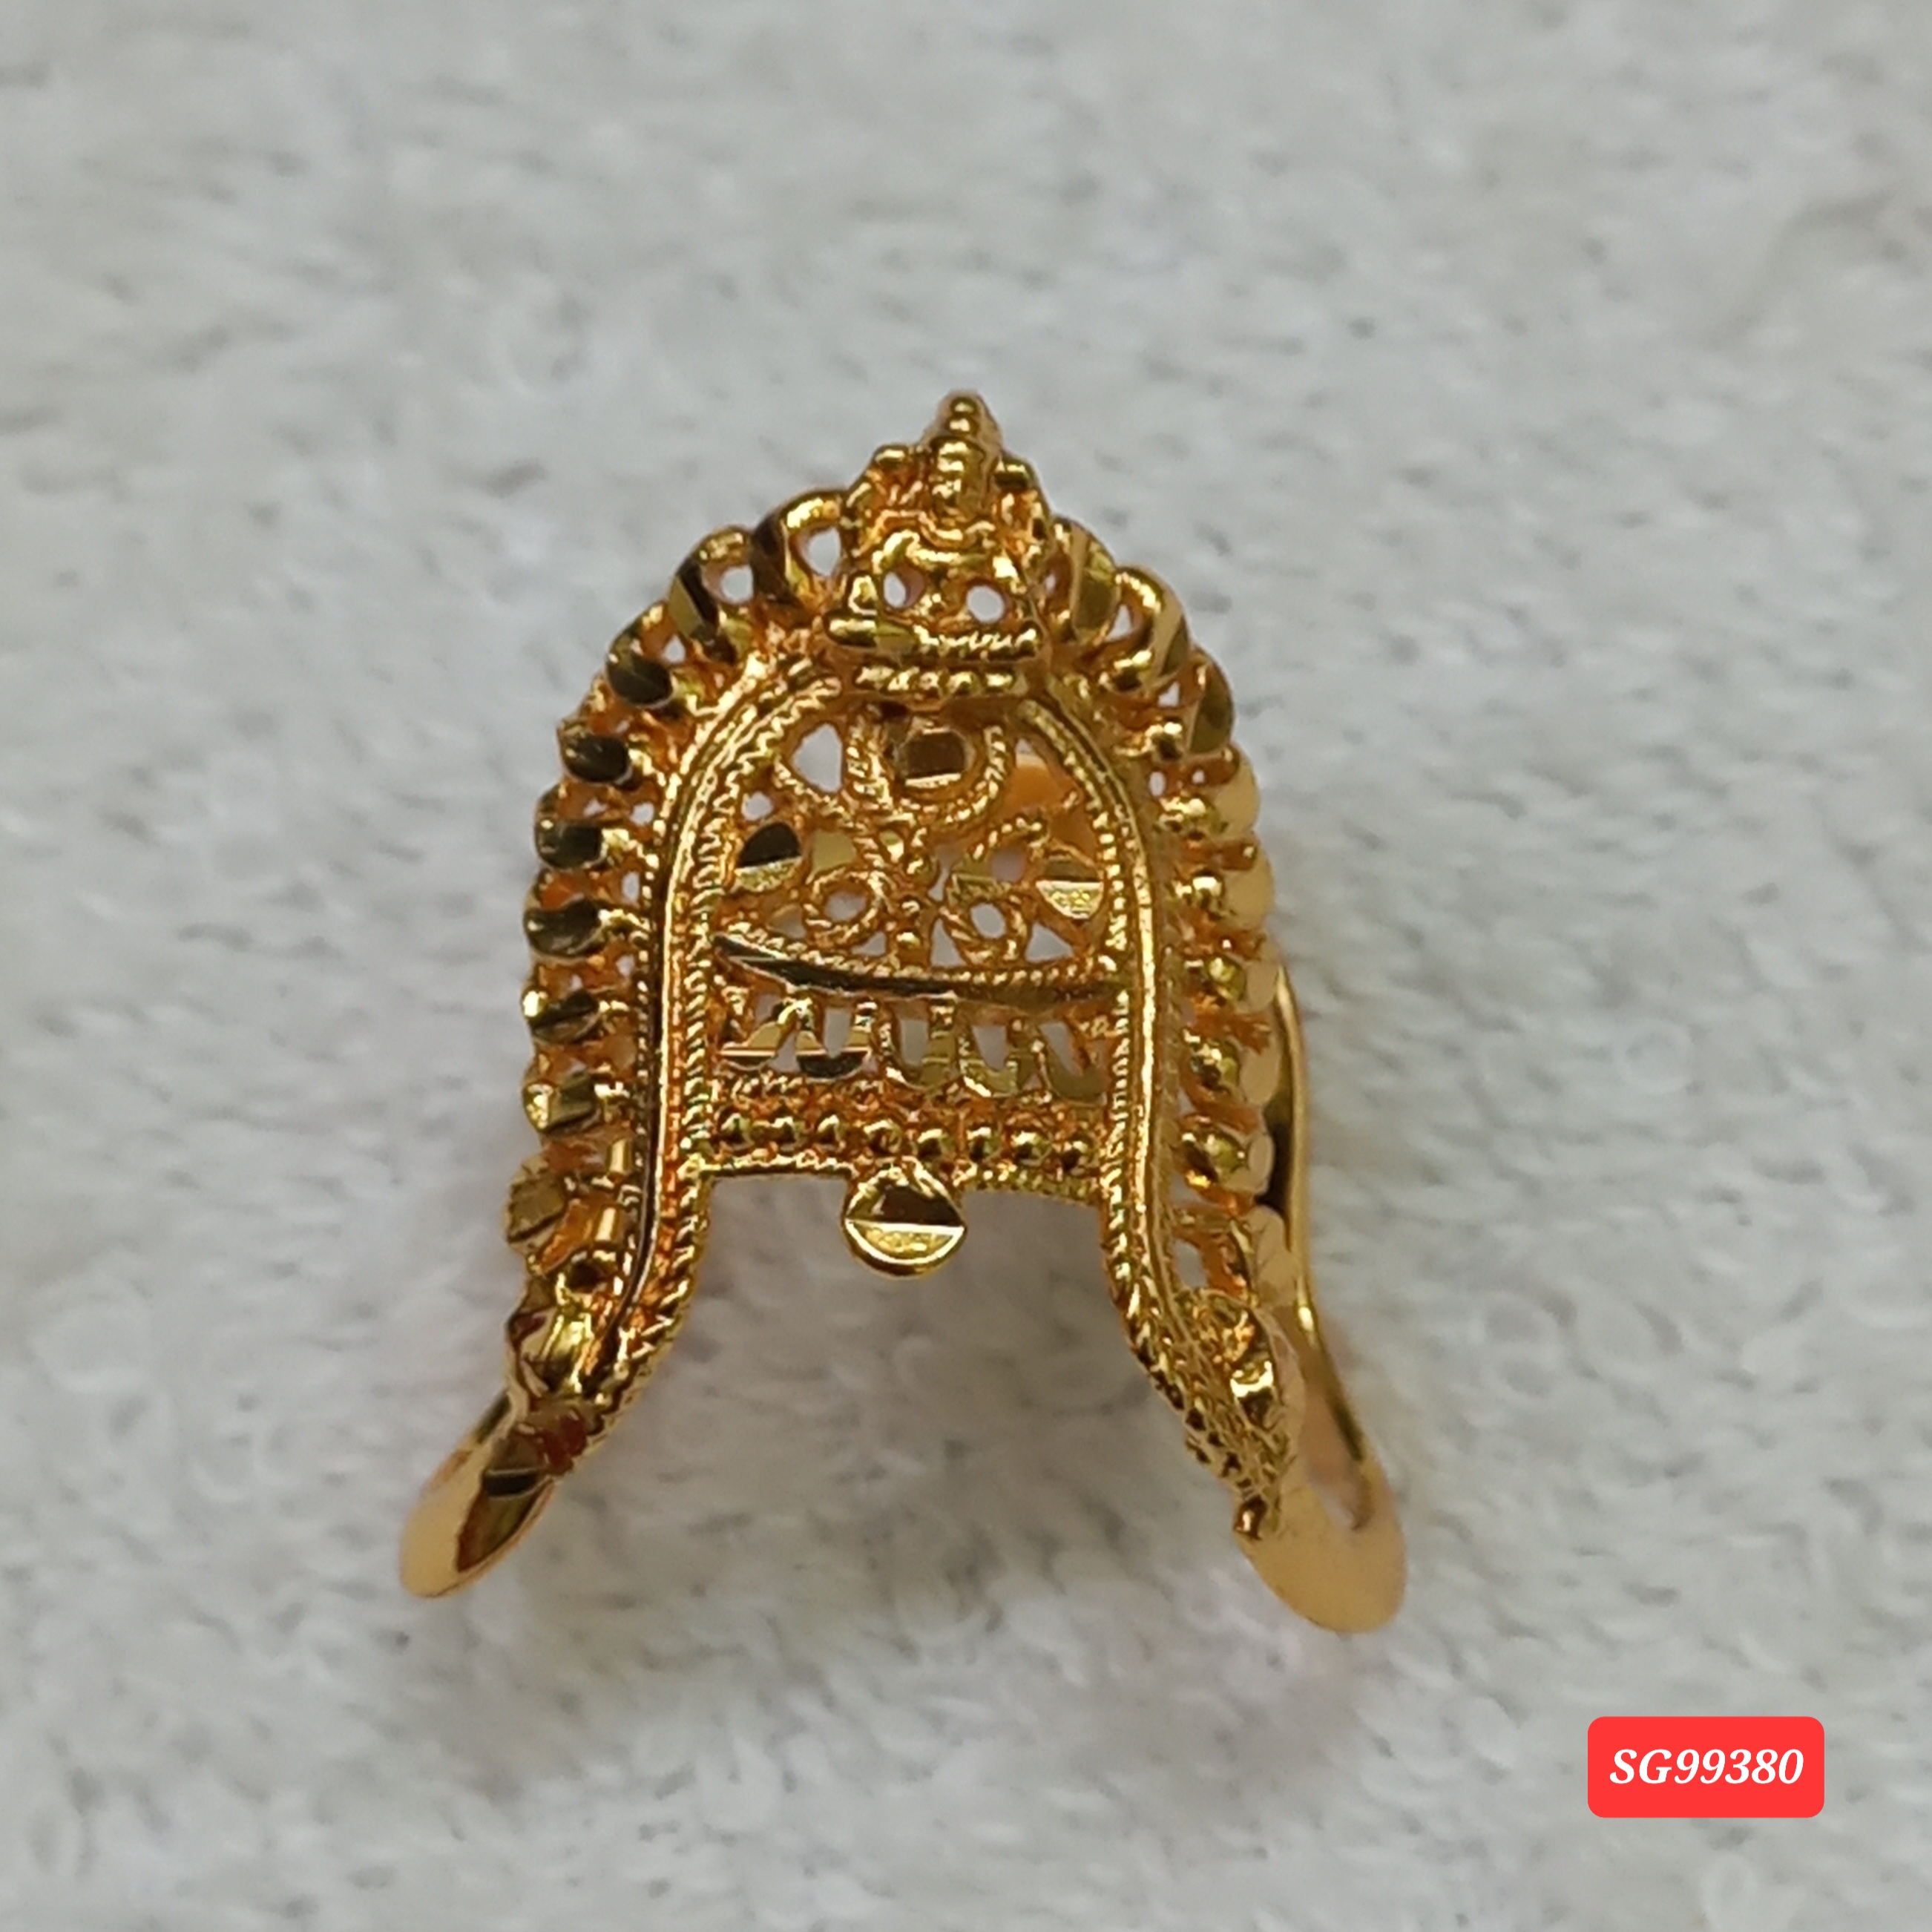 latest gold vanki ring designs//bridal finger ring designs// - YouTube